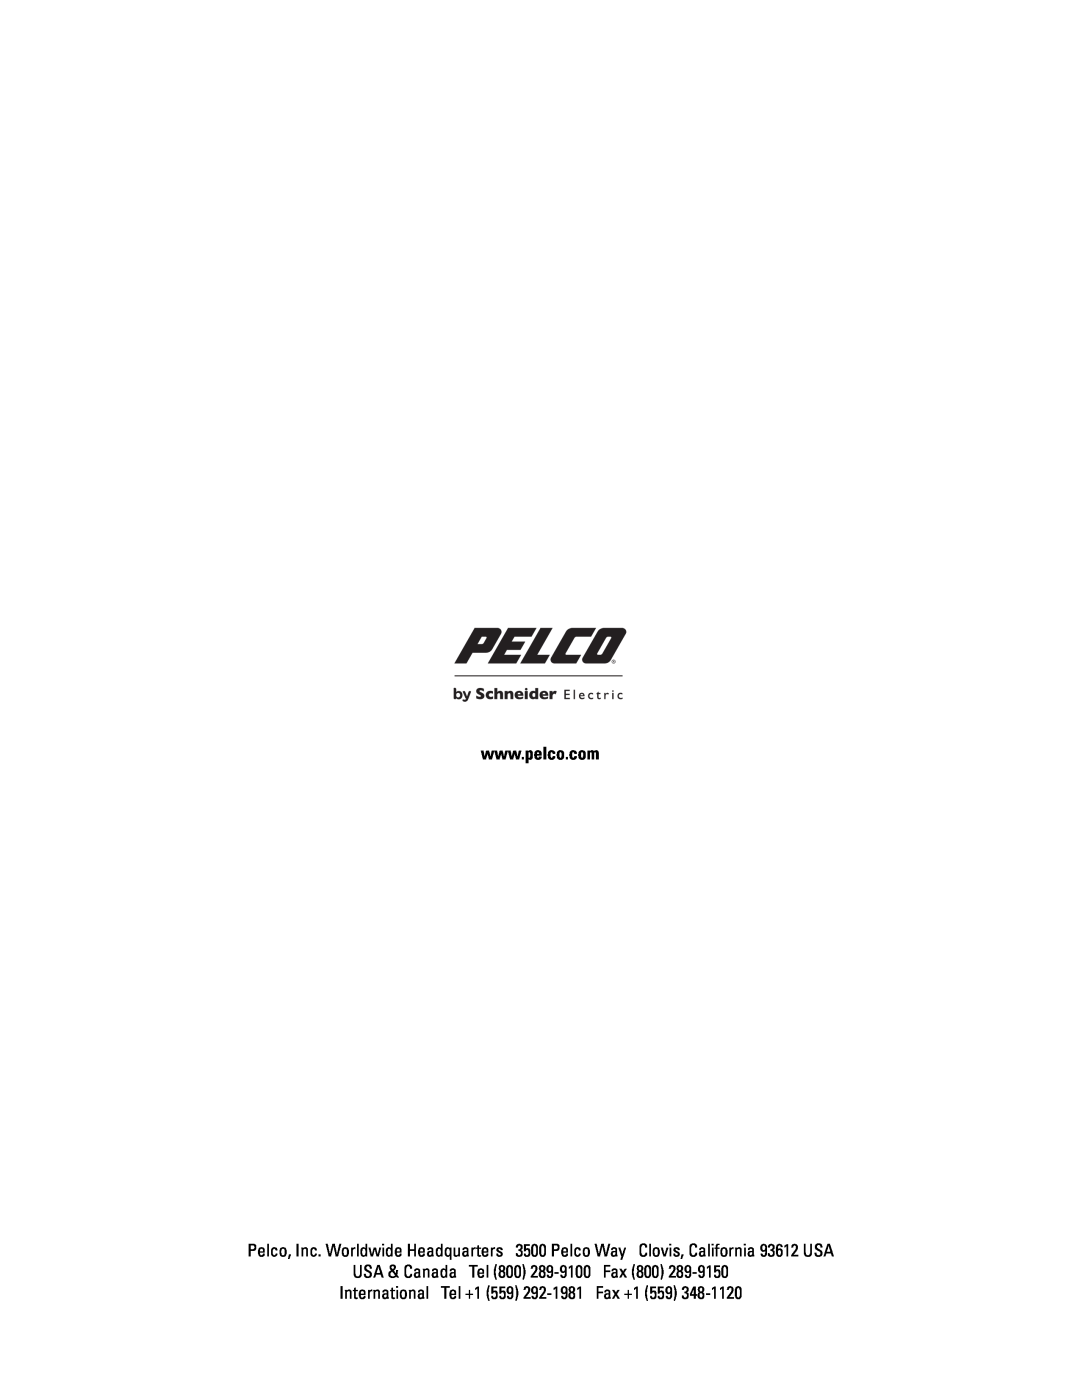 Pelco C654M-E (12/08) 3 manual USA & Canada Tel 800 289-9100 Fax 800, International Tel +1 559 292-1981 Fax +1 559 